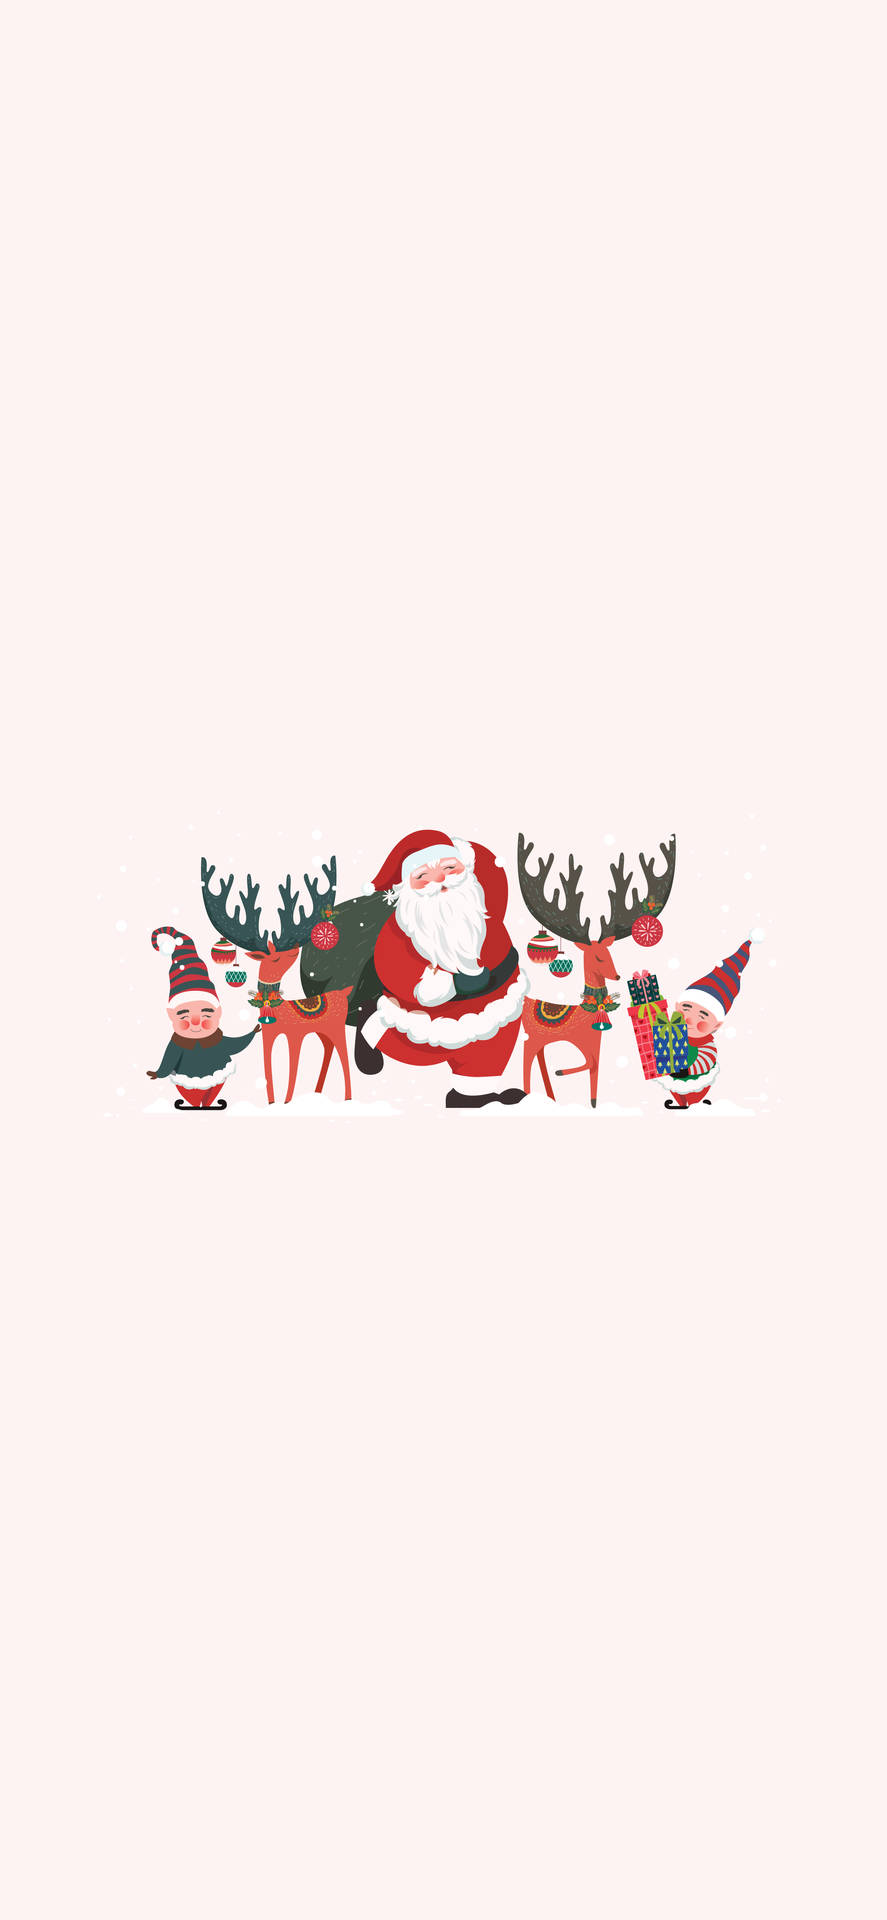 Download Preppy Santa Claus Christmas Wallpaper